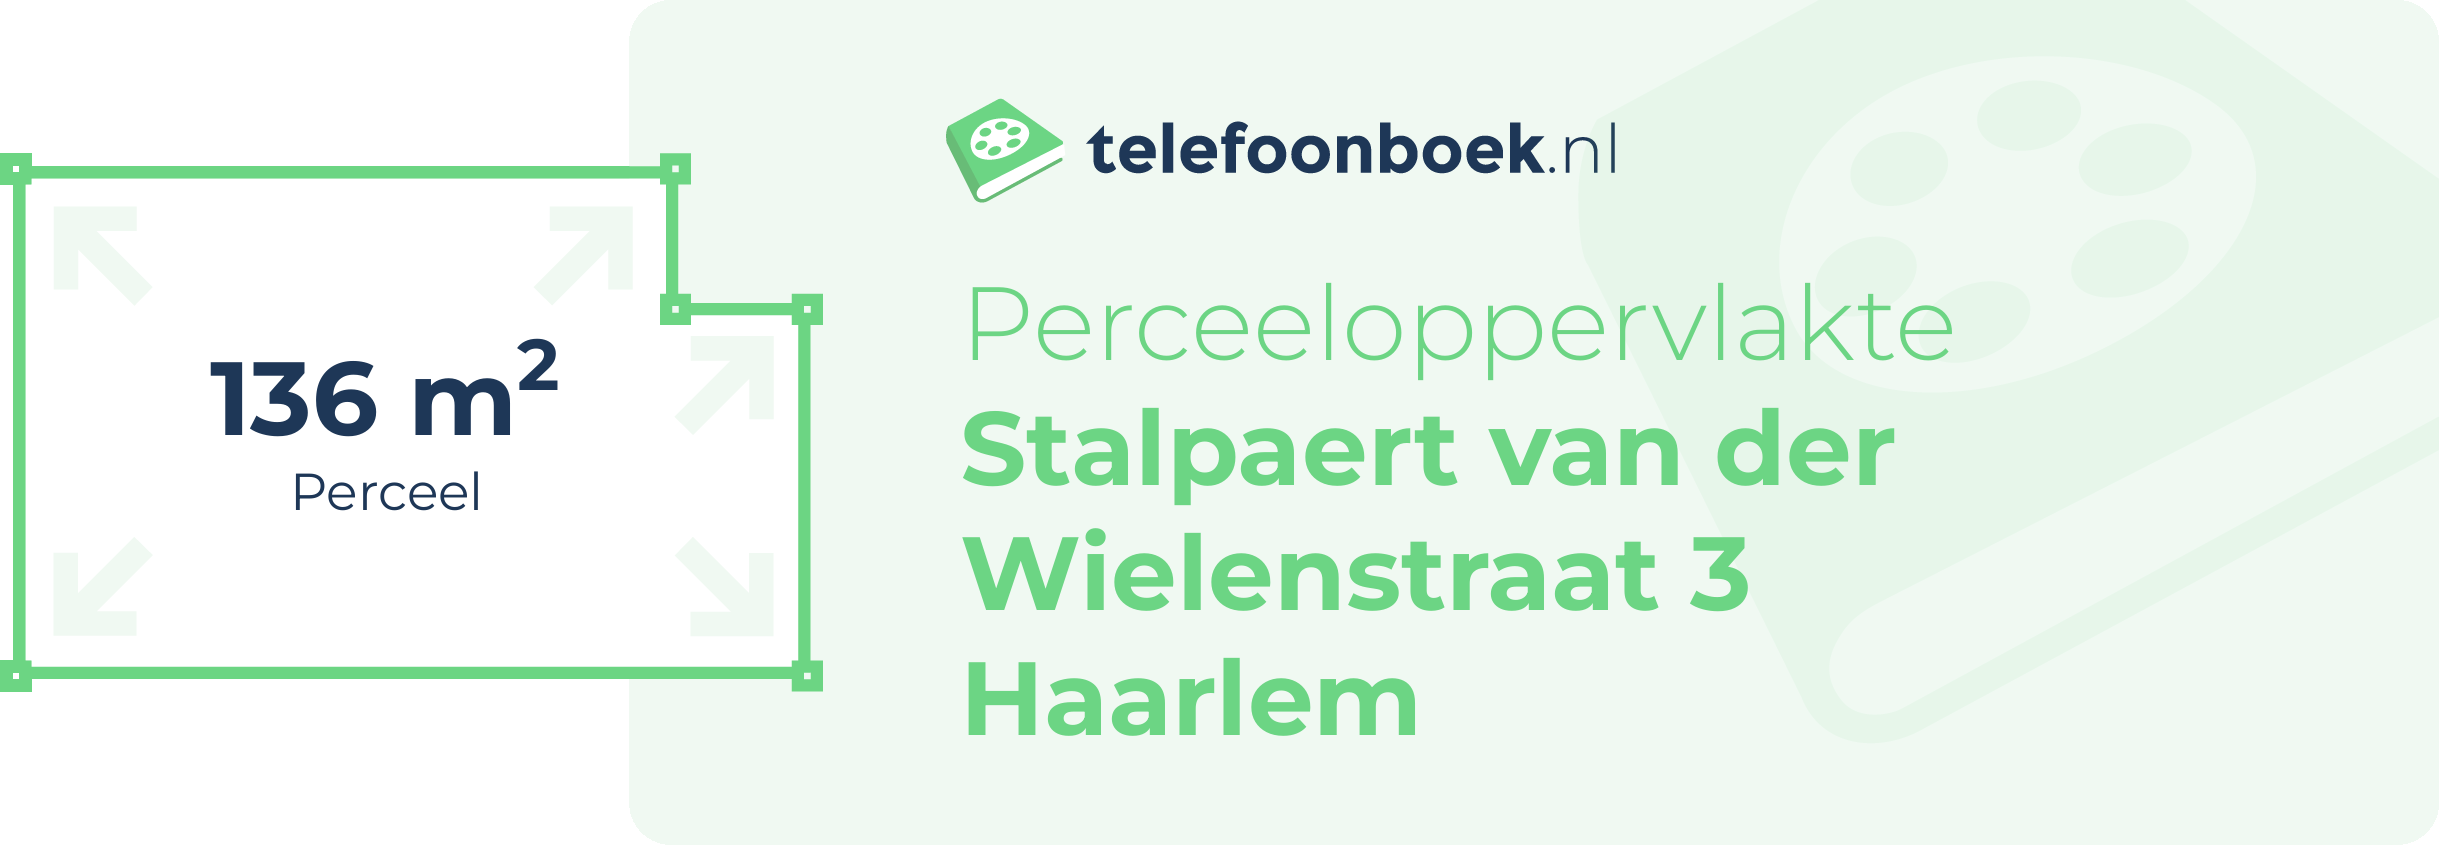 Perceeloppervlakte Stalpaert Van Der Wielenstraat 3 Haarlem